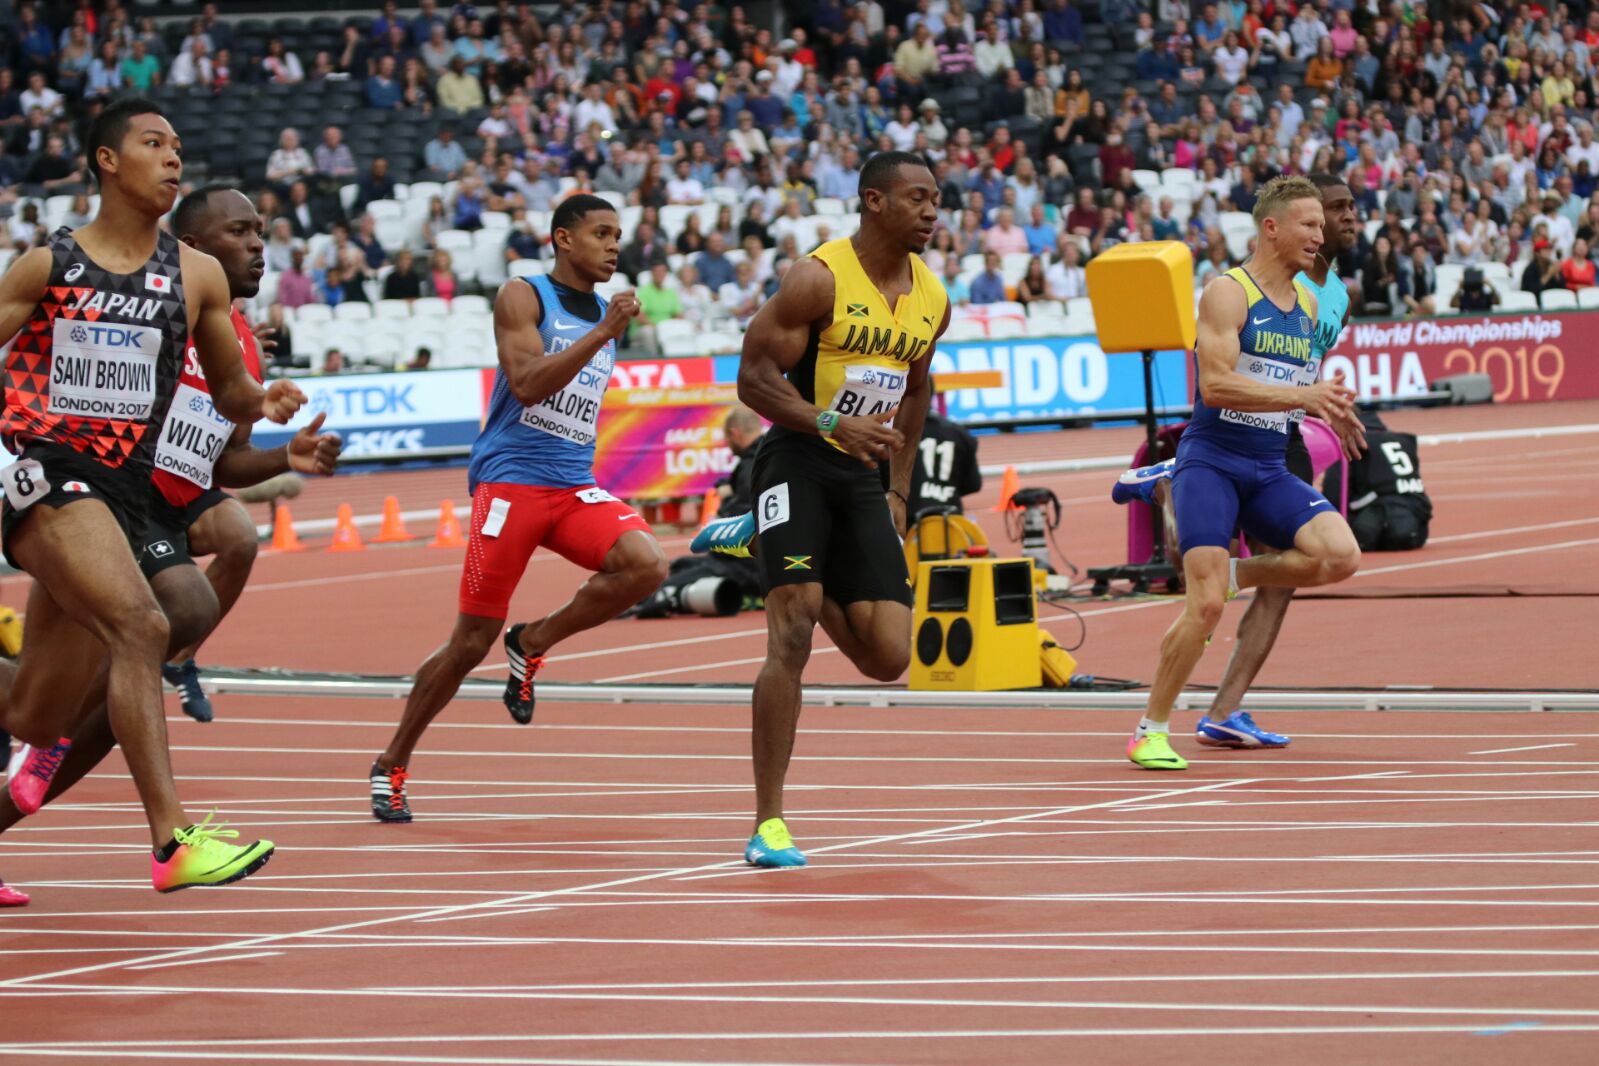 London 2017 – McLeod, Blake join Bolt for 4x100m final